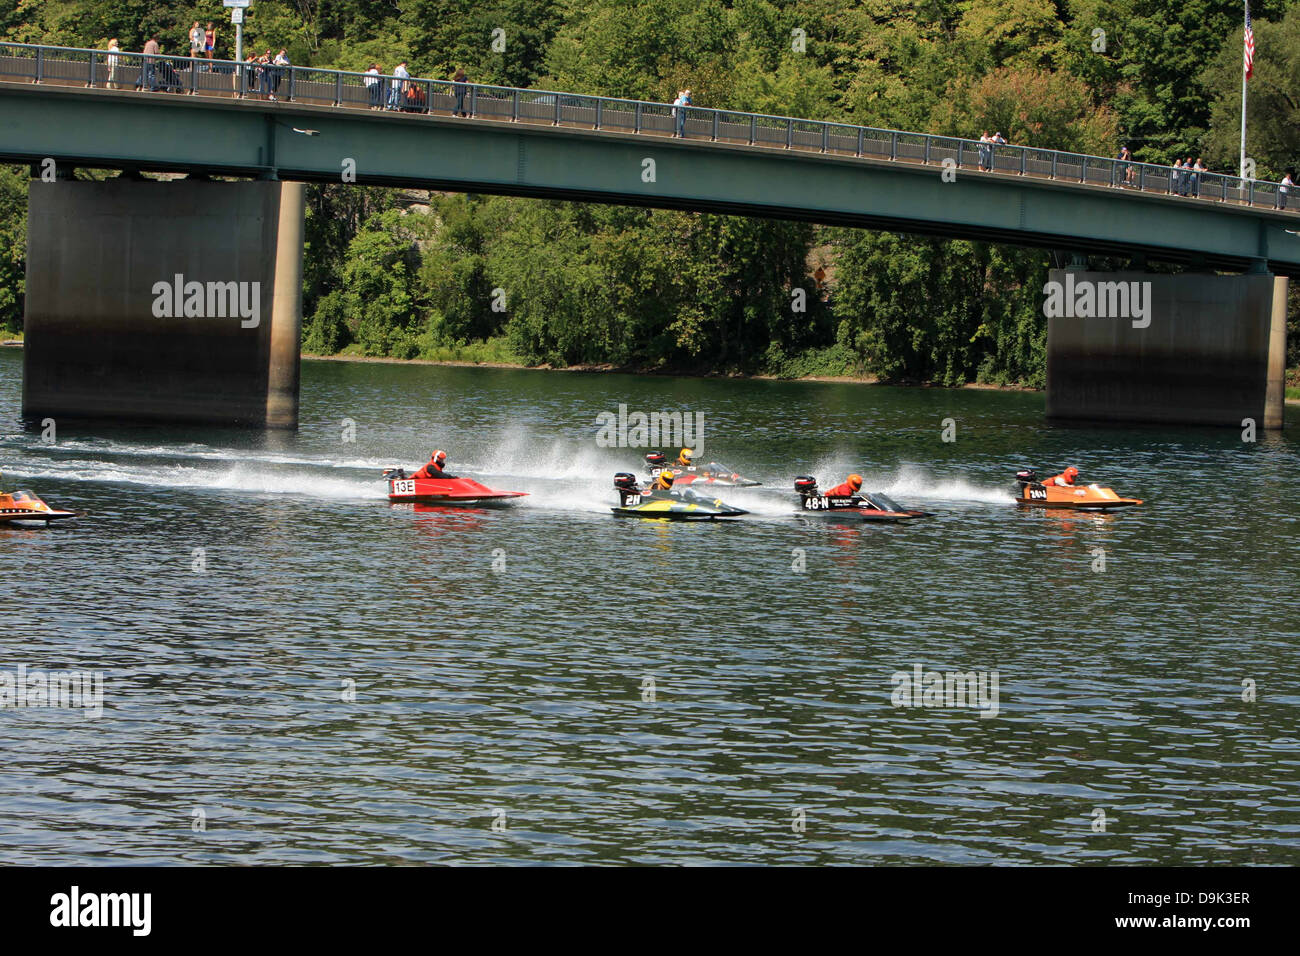 outboard motor boat race racer regatta water river lake fast speed Lock Haven, Susquehanna River Clinton County, PA Pennsylvania Stock Photo